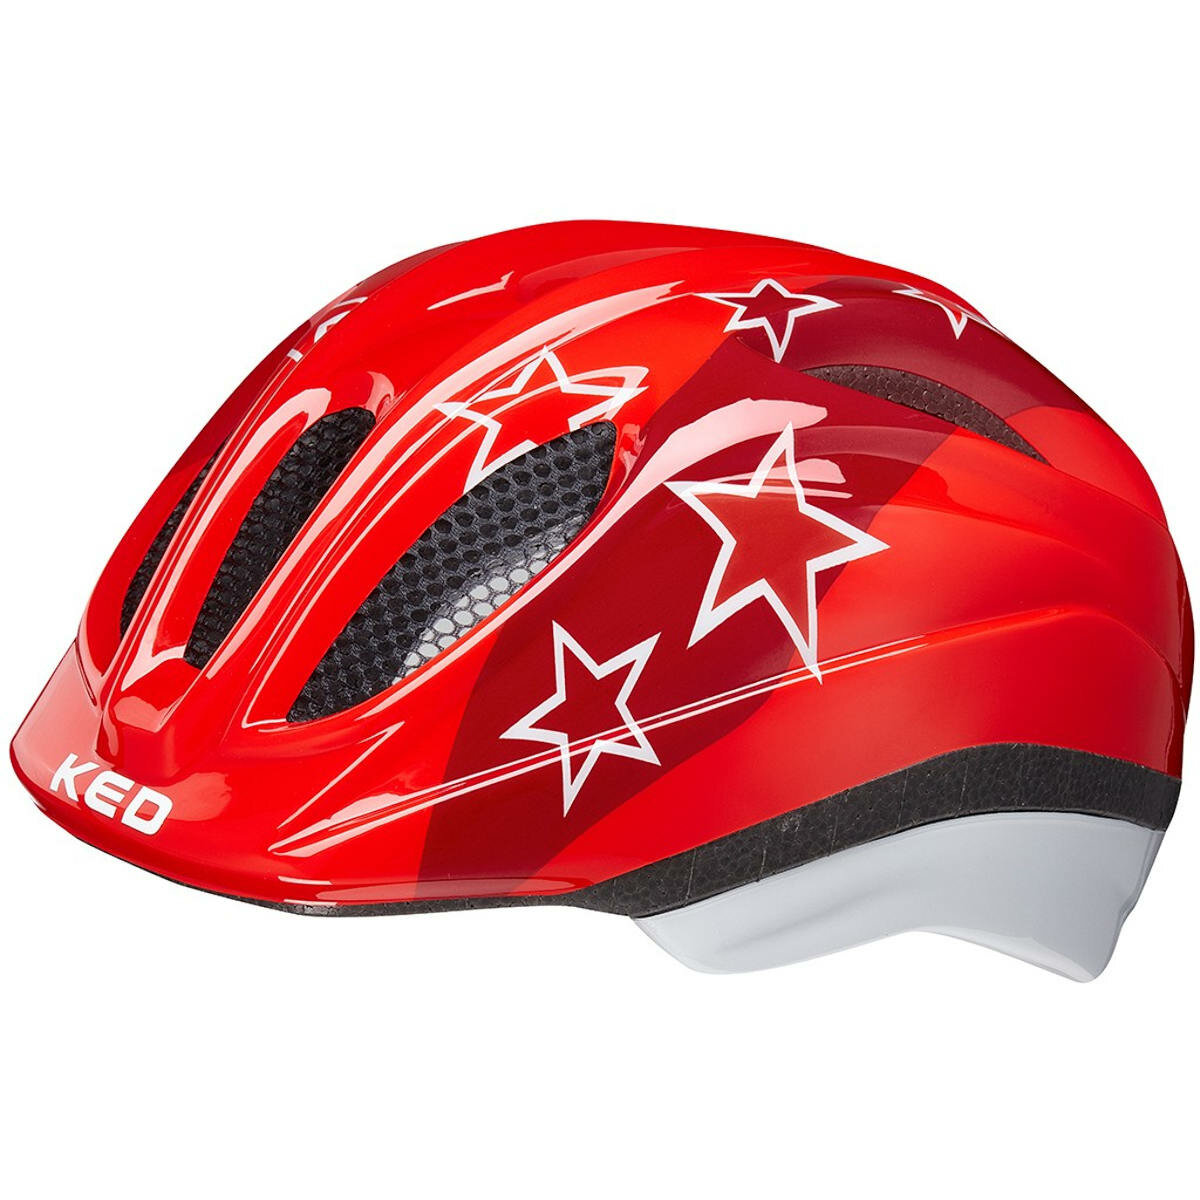 KED Fahrradhelm Meggy II Trend red stars, 39,95 €